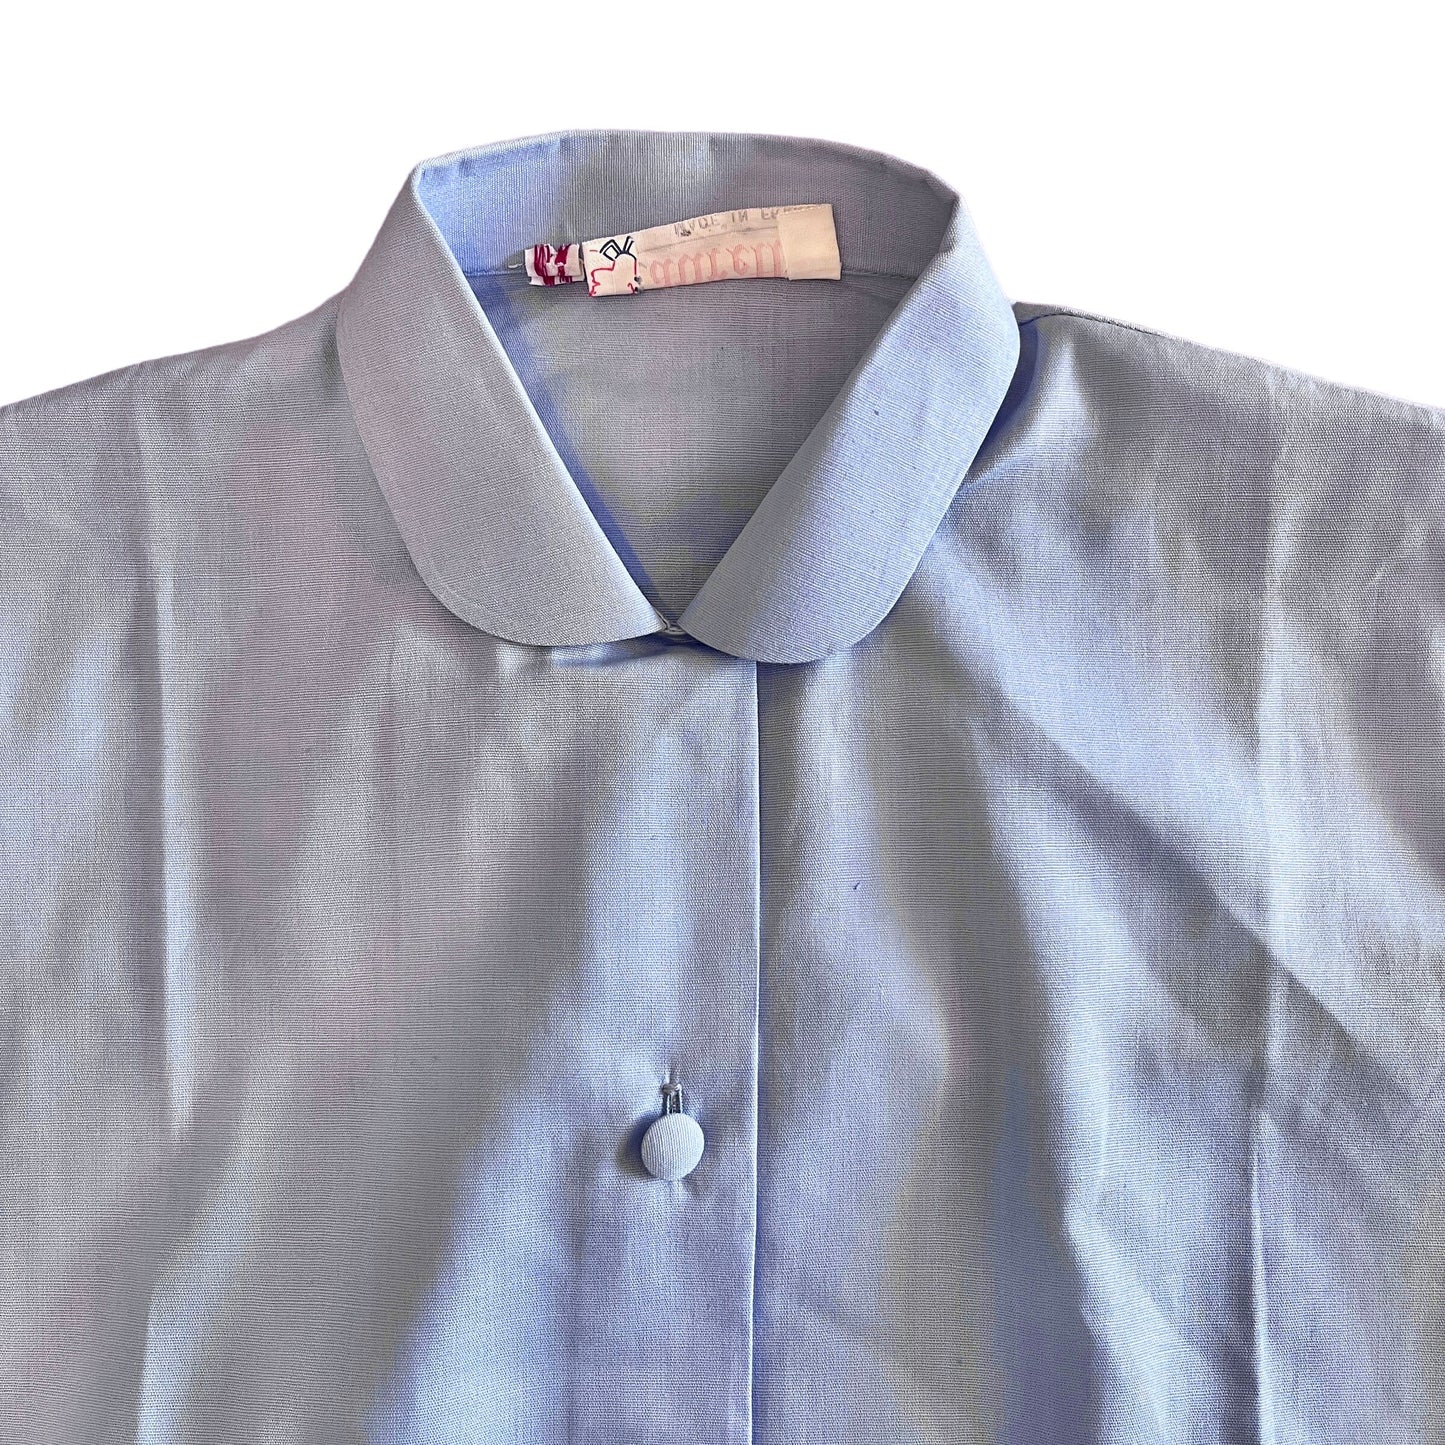 1960's Blue Peter Pan Collar Shirt / 8-10Y